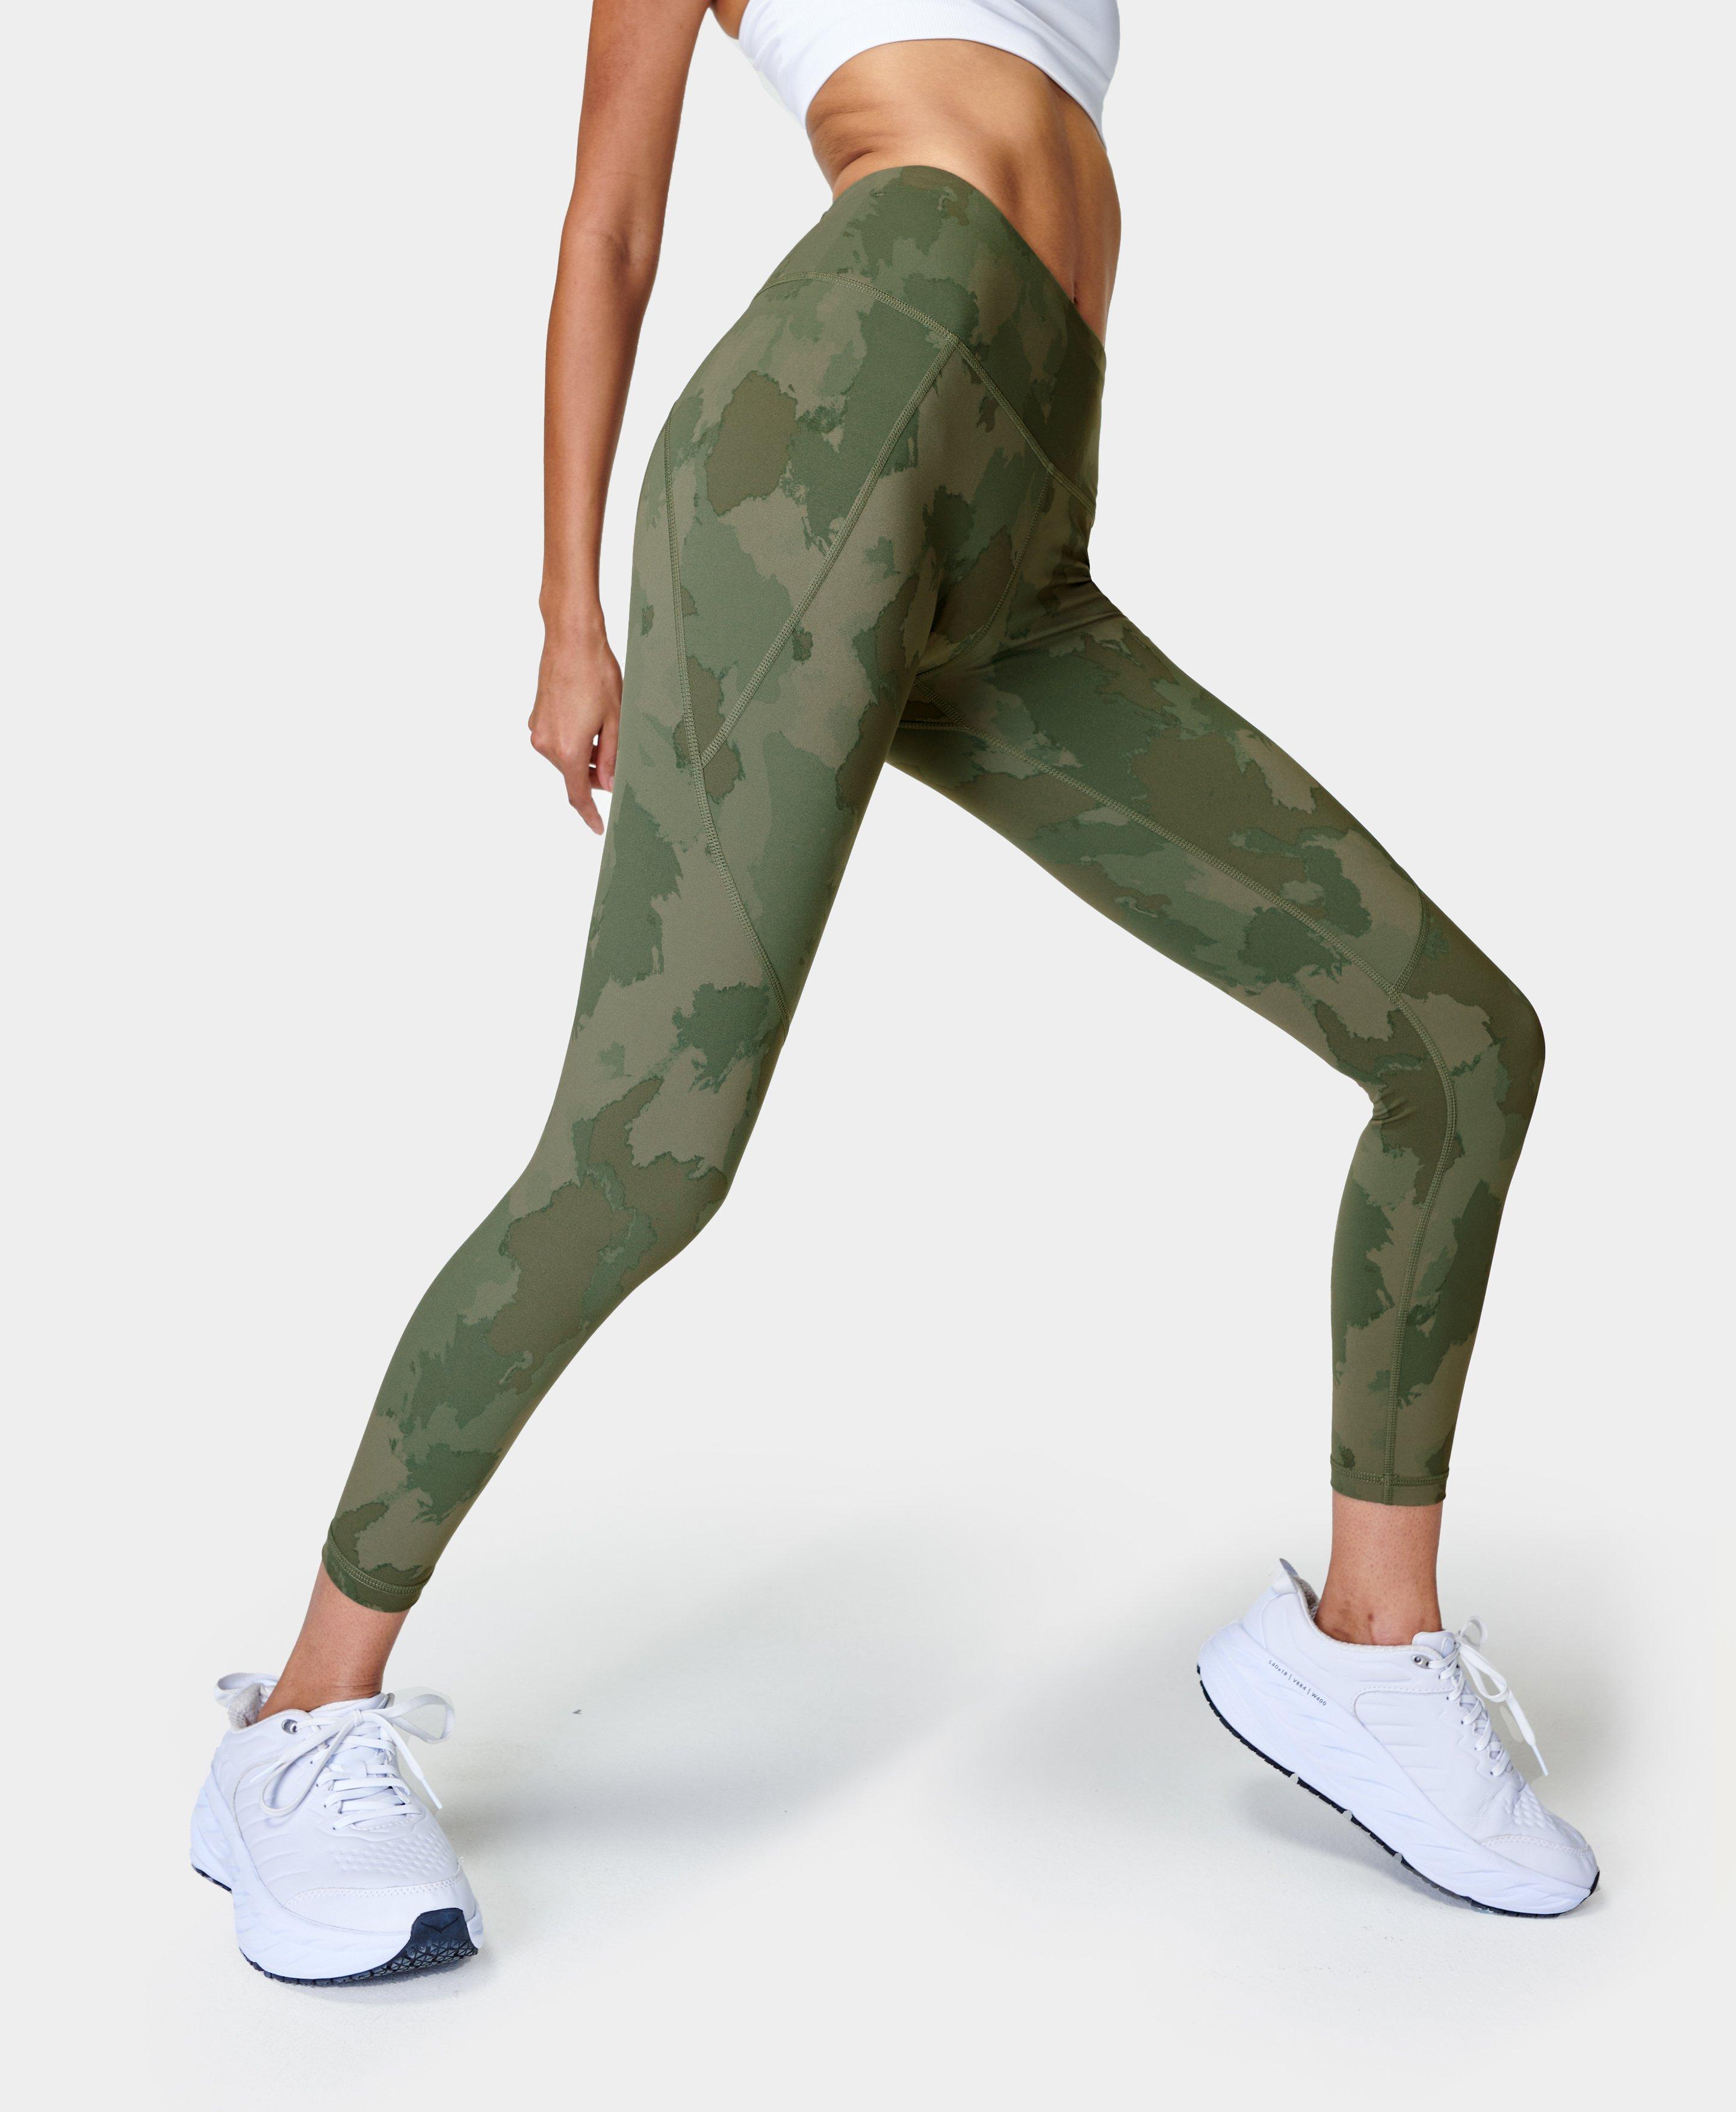 Women's Workout Pants in Green